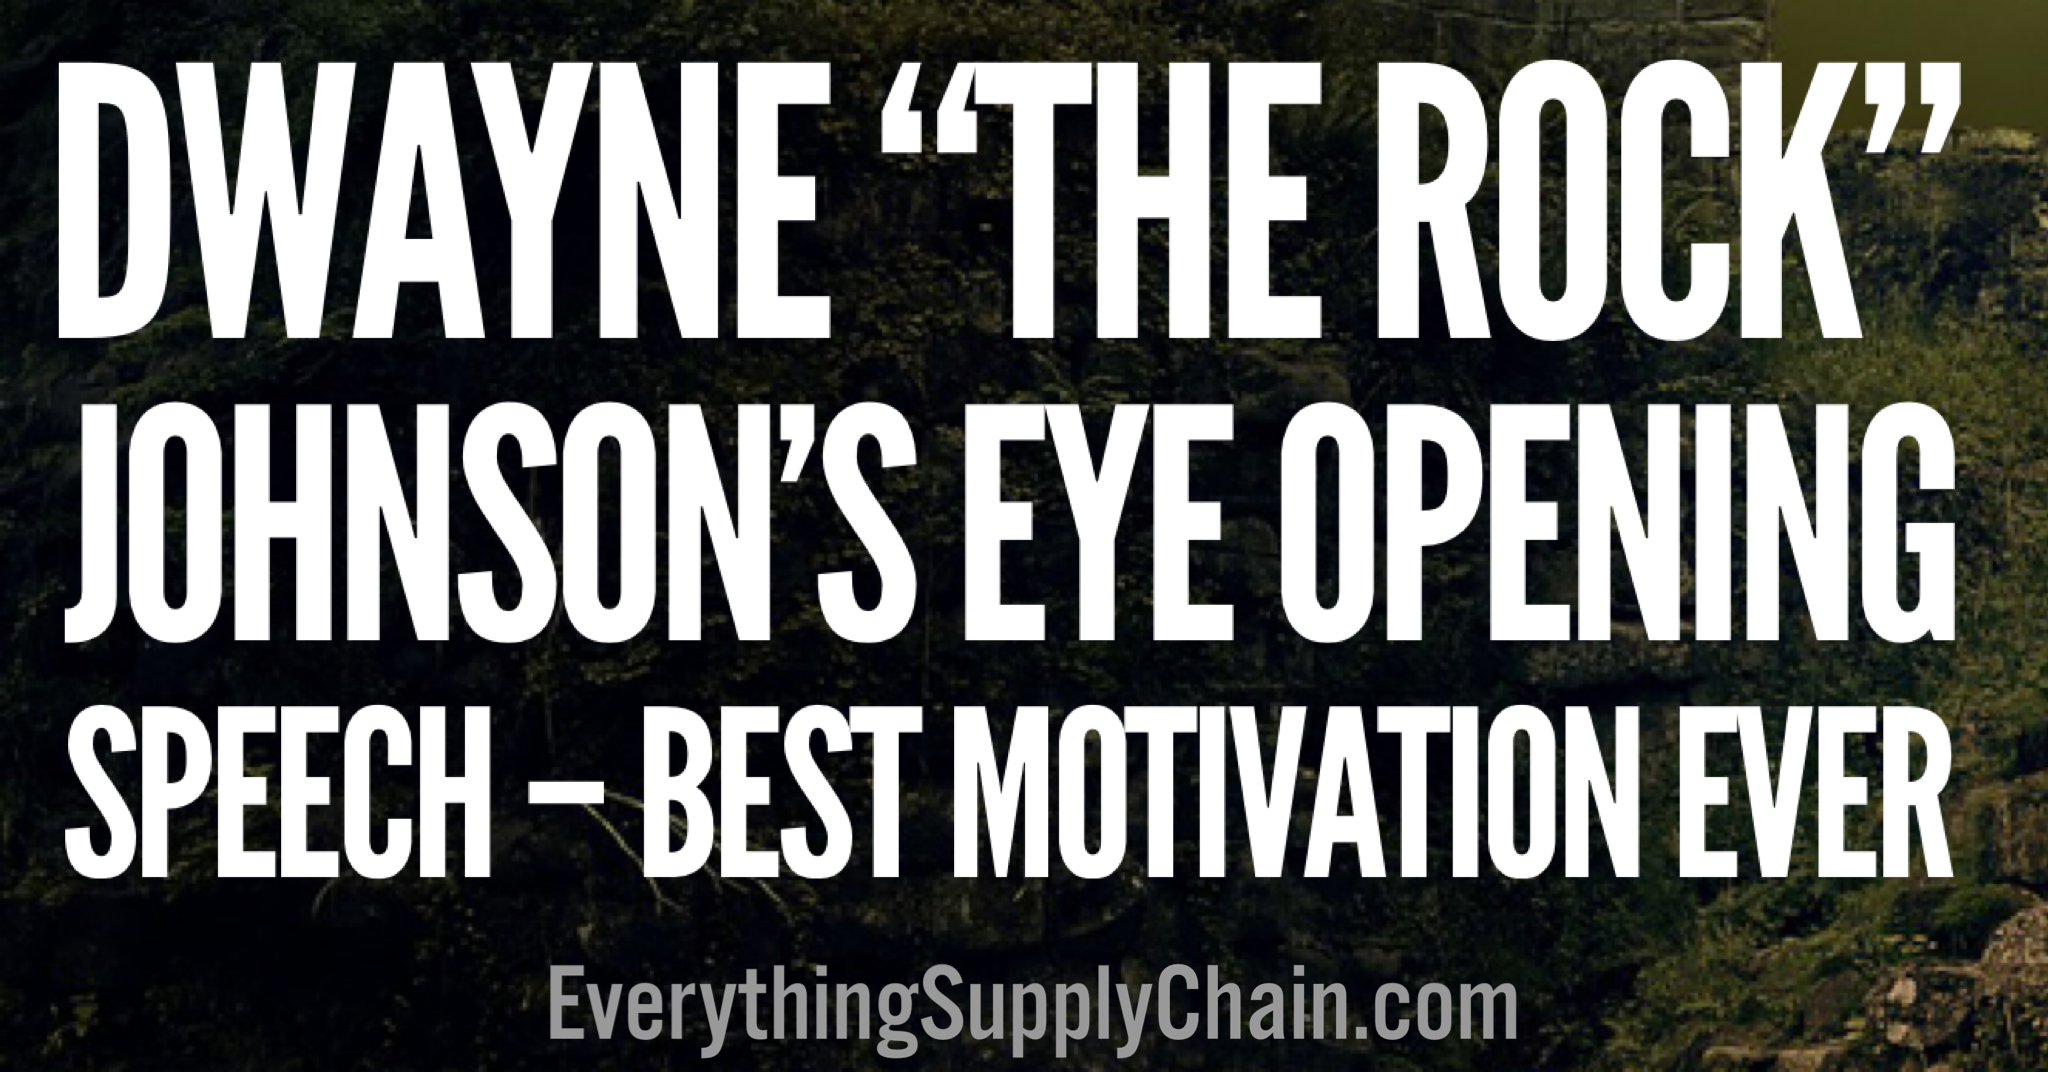 Dwayne The Rock Johnson S Eye Opening Speech Best Motivation Ever